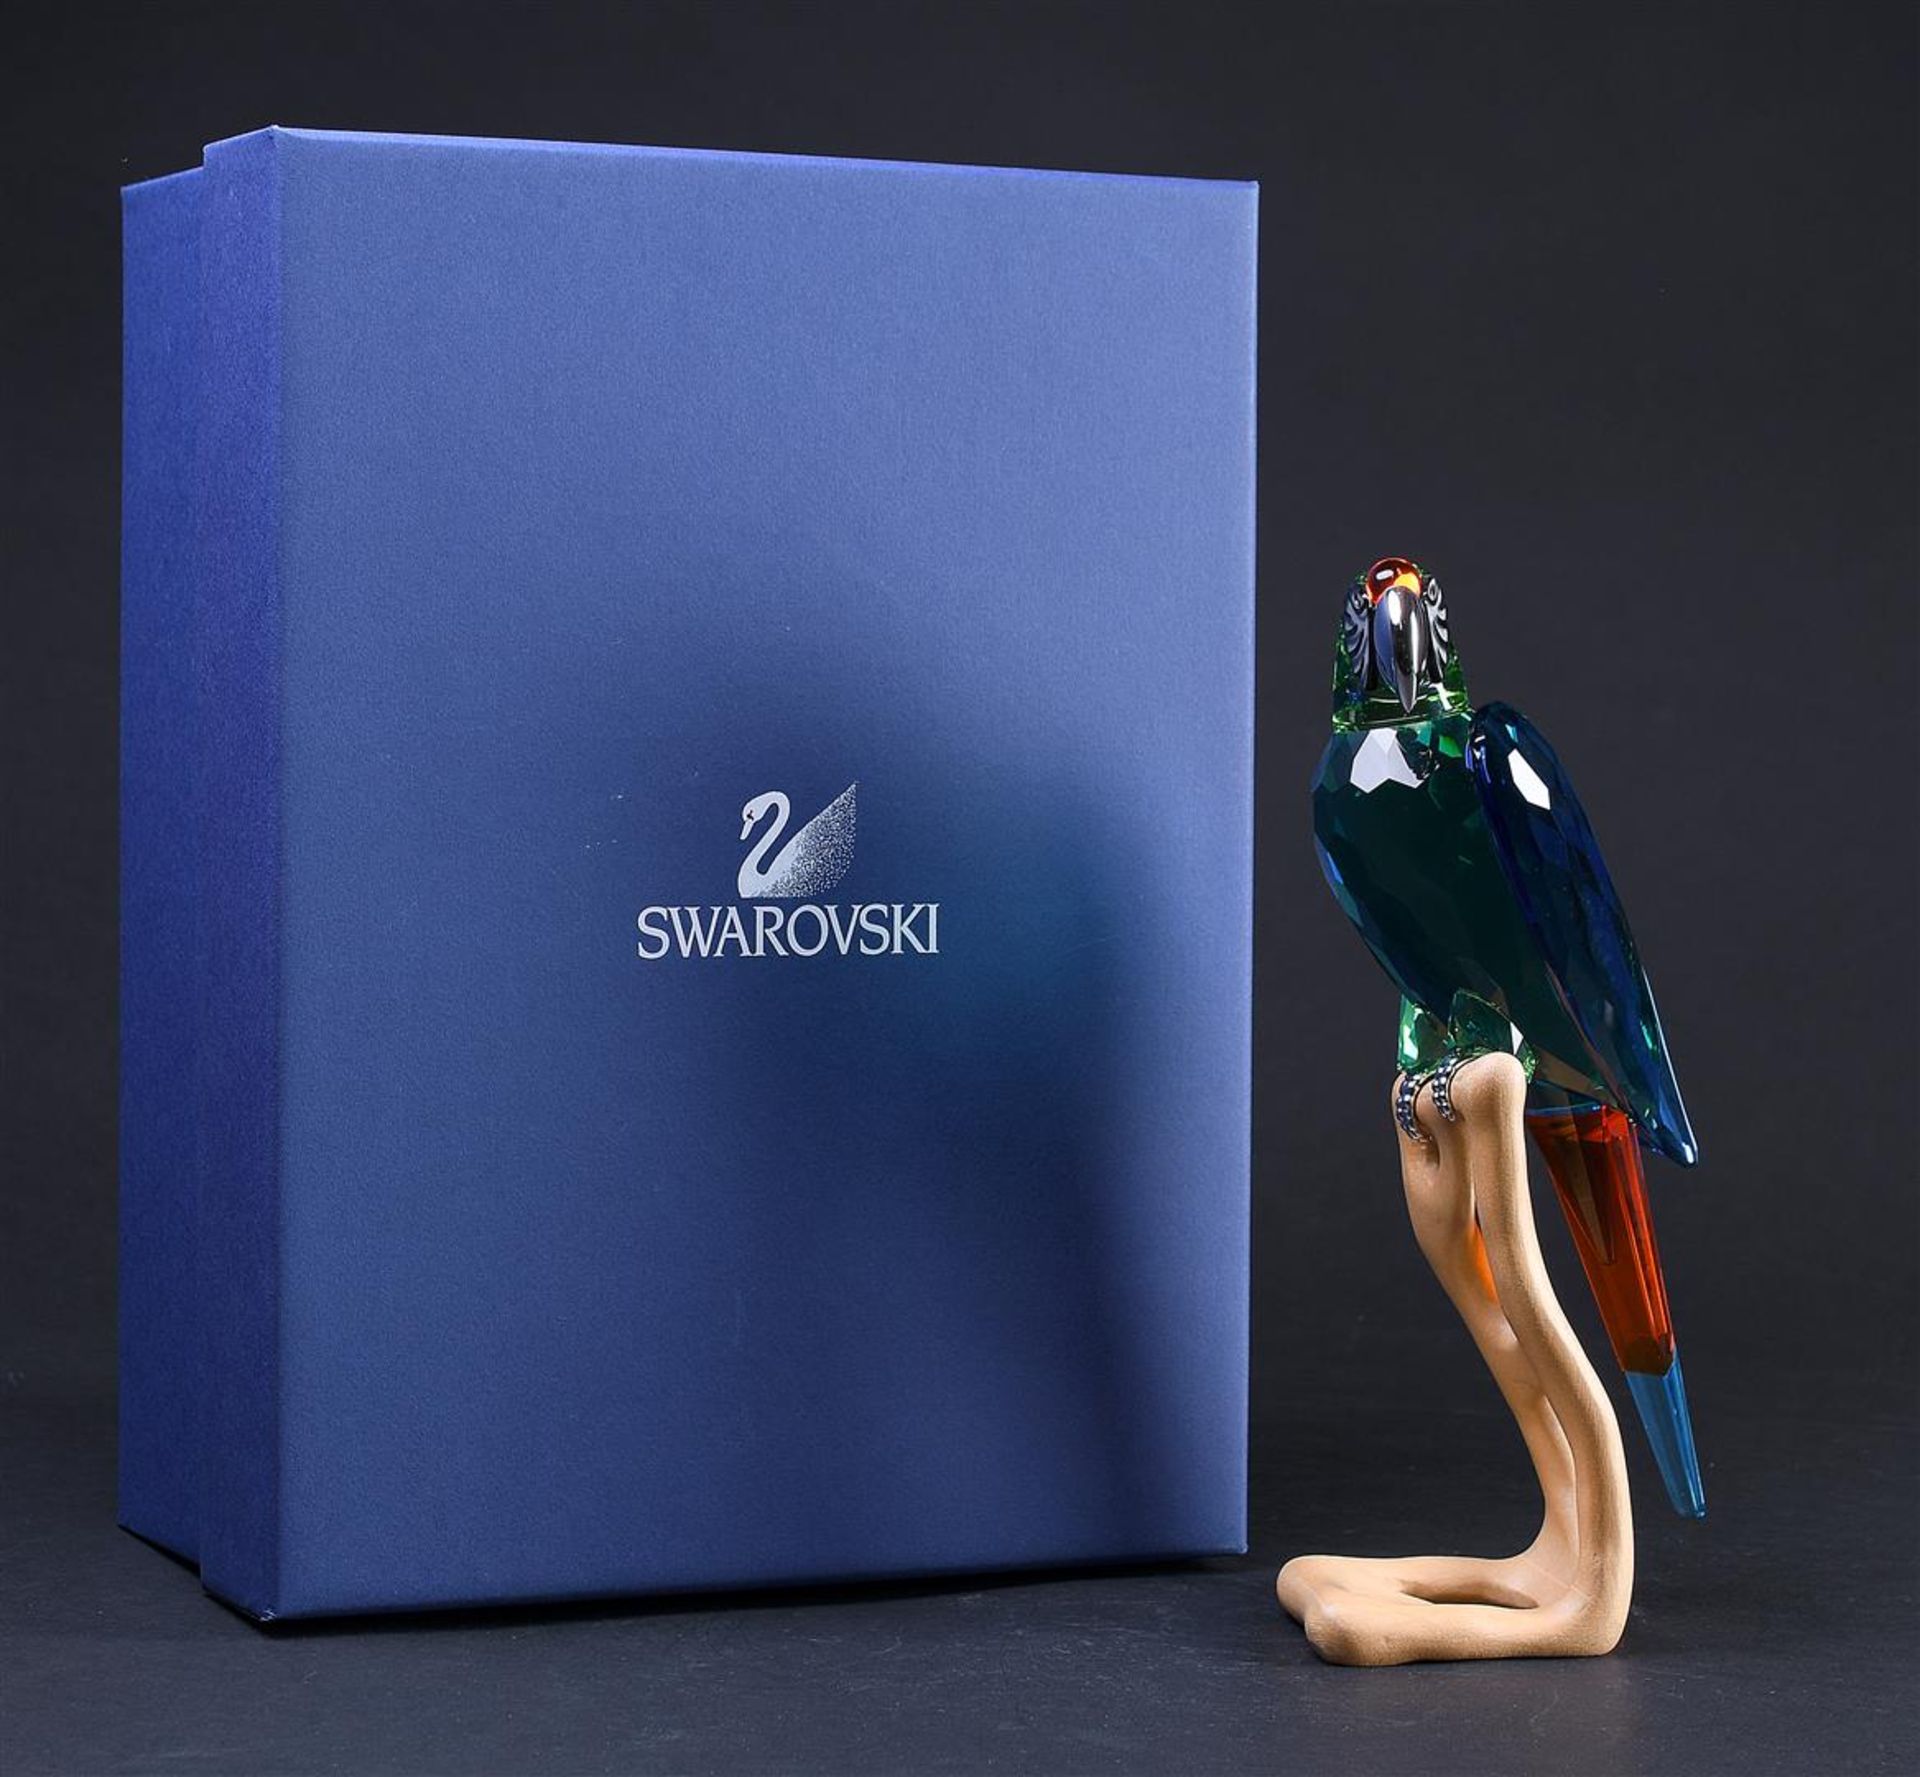 Swarovski, Macaw paradise bird, Year of issue 2005, 685824. Includes original box.
H. 24 cm. - Image 7 of 7